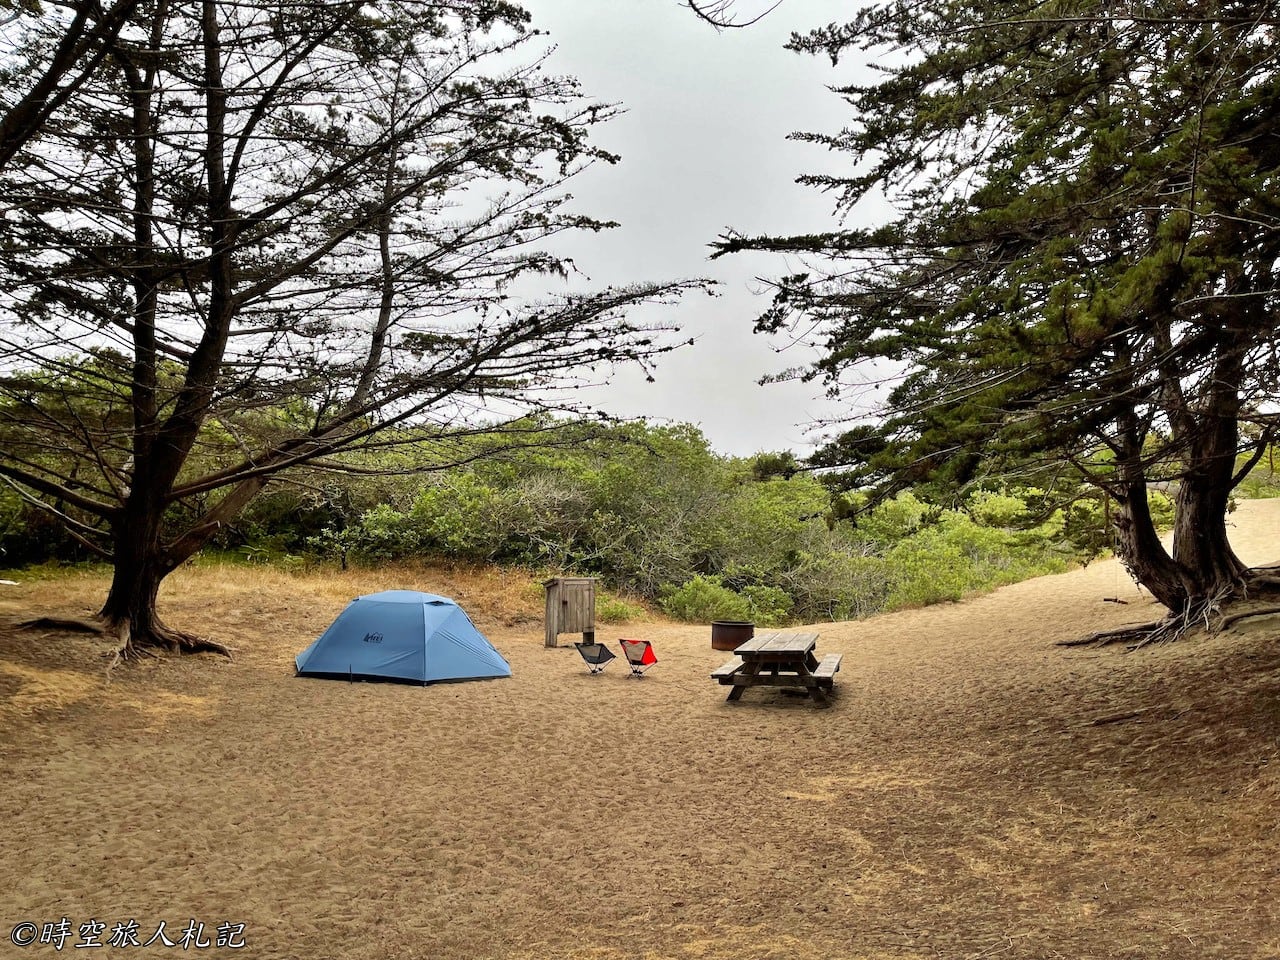 Bodega dunes campground 露營